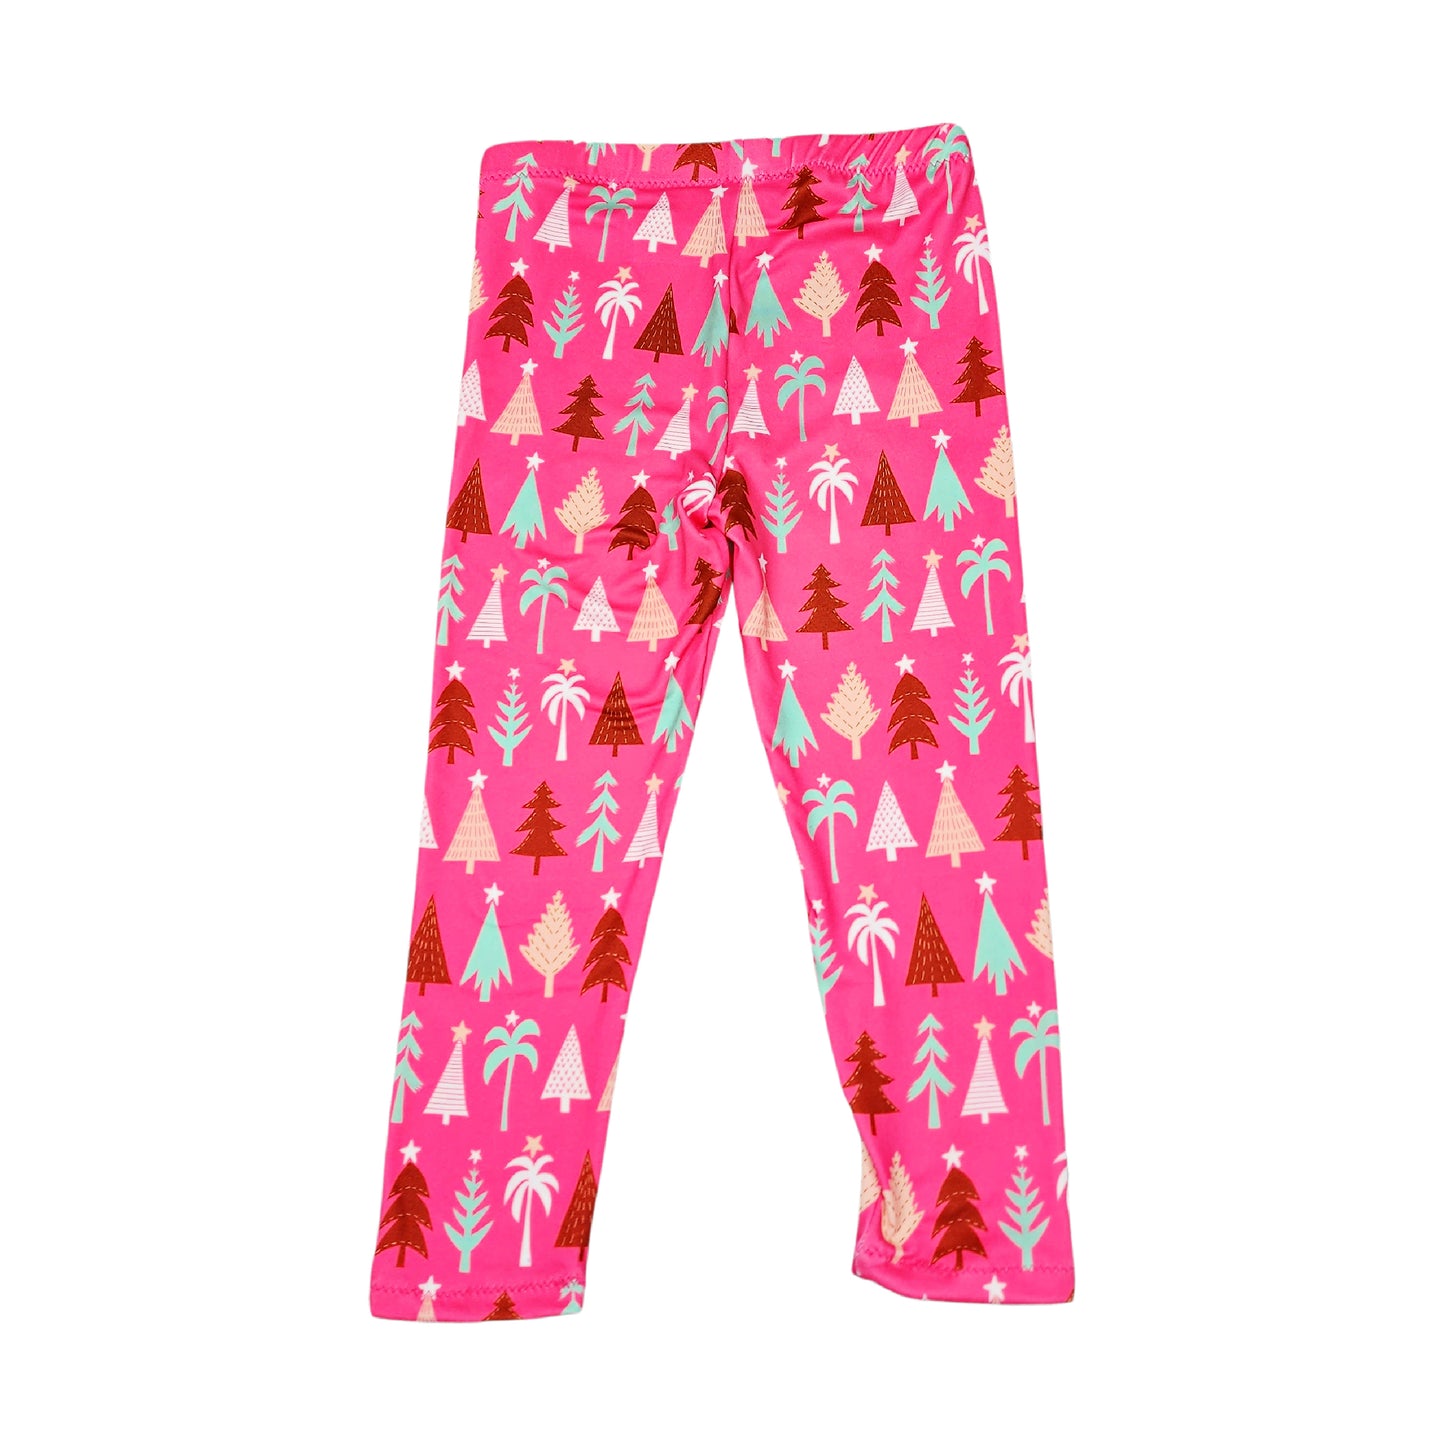 Bright Pink Christmas Tree Leggings for Girls, NB - 12, Super Soft